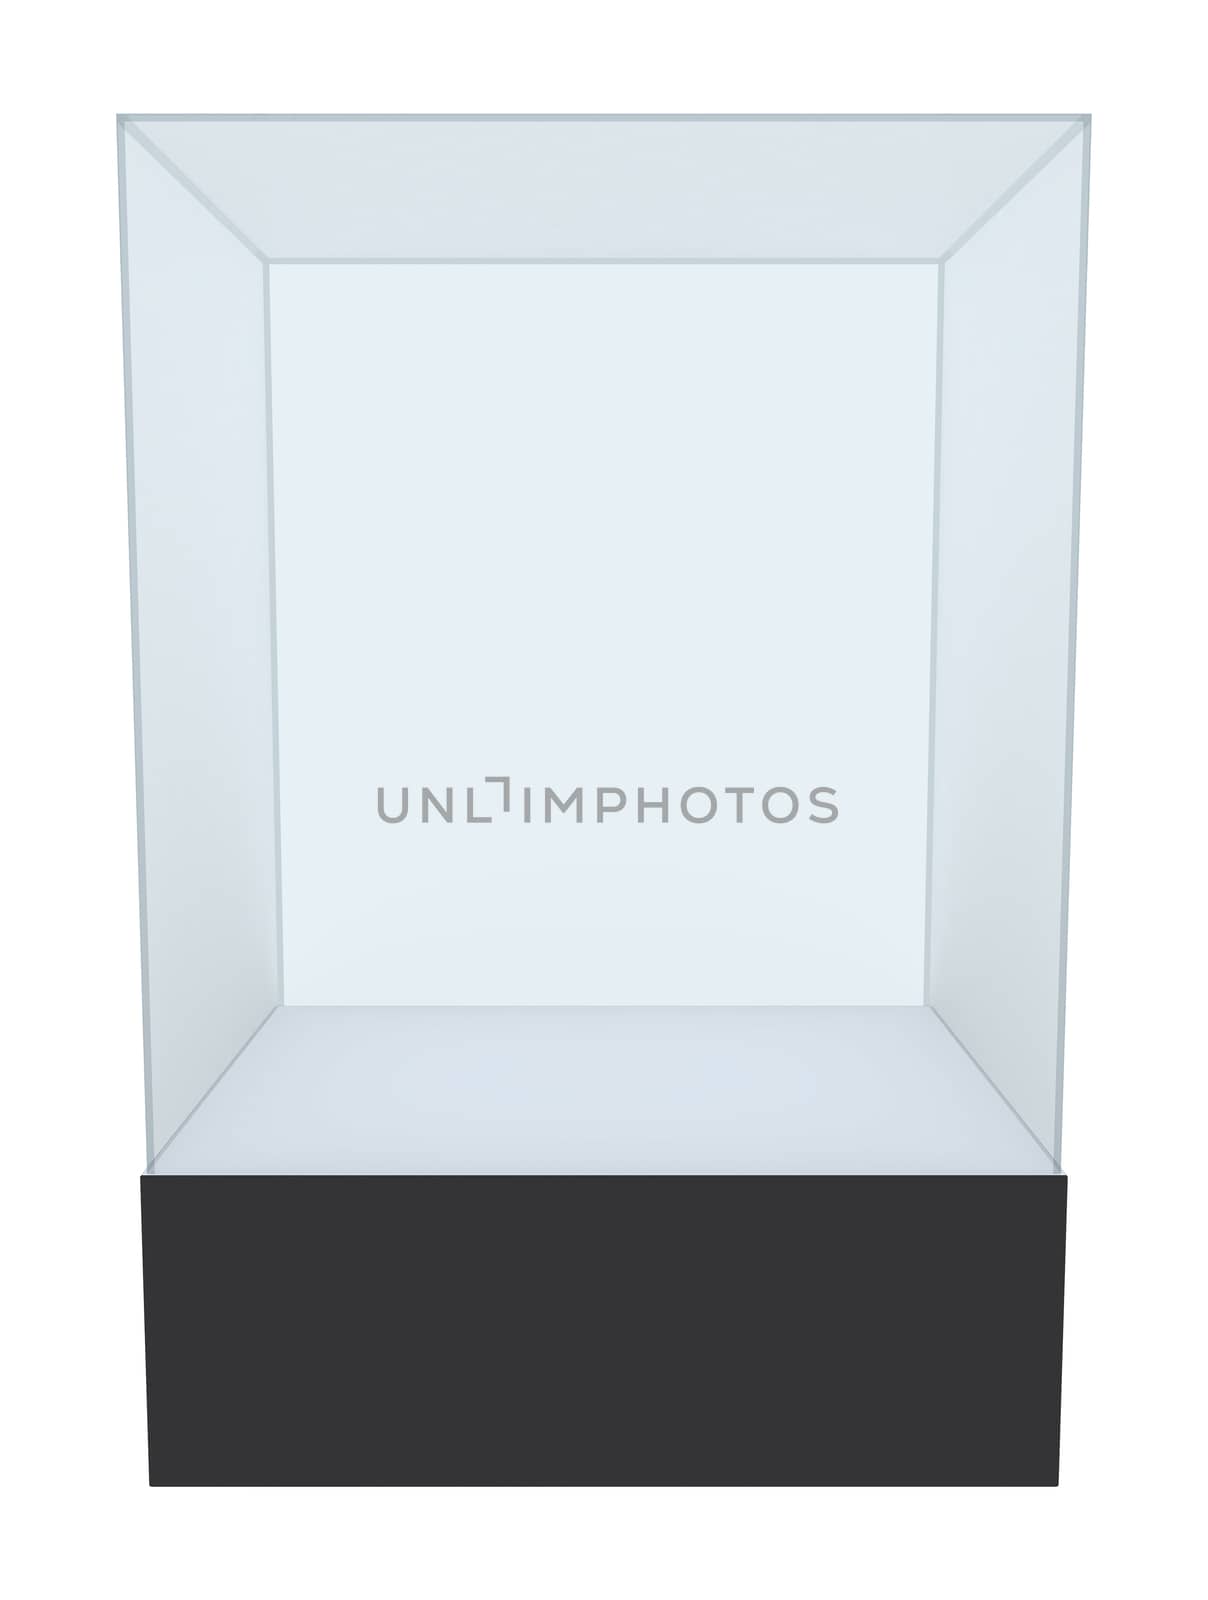 Glass cube on pedestal. 3d illustration on white background